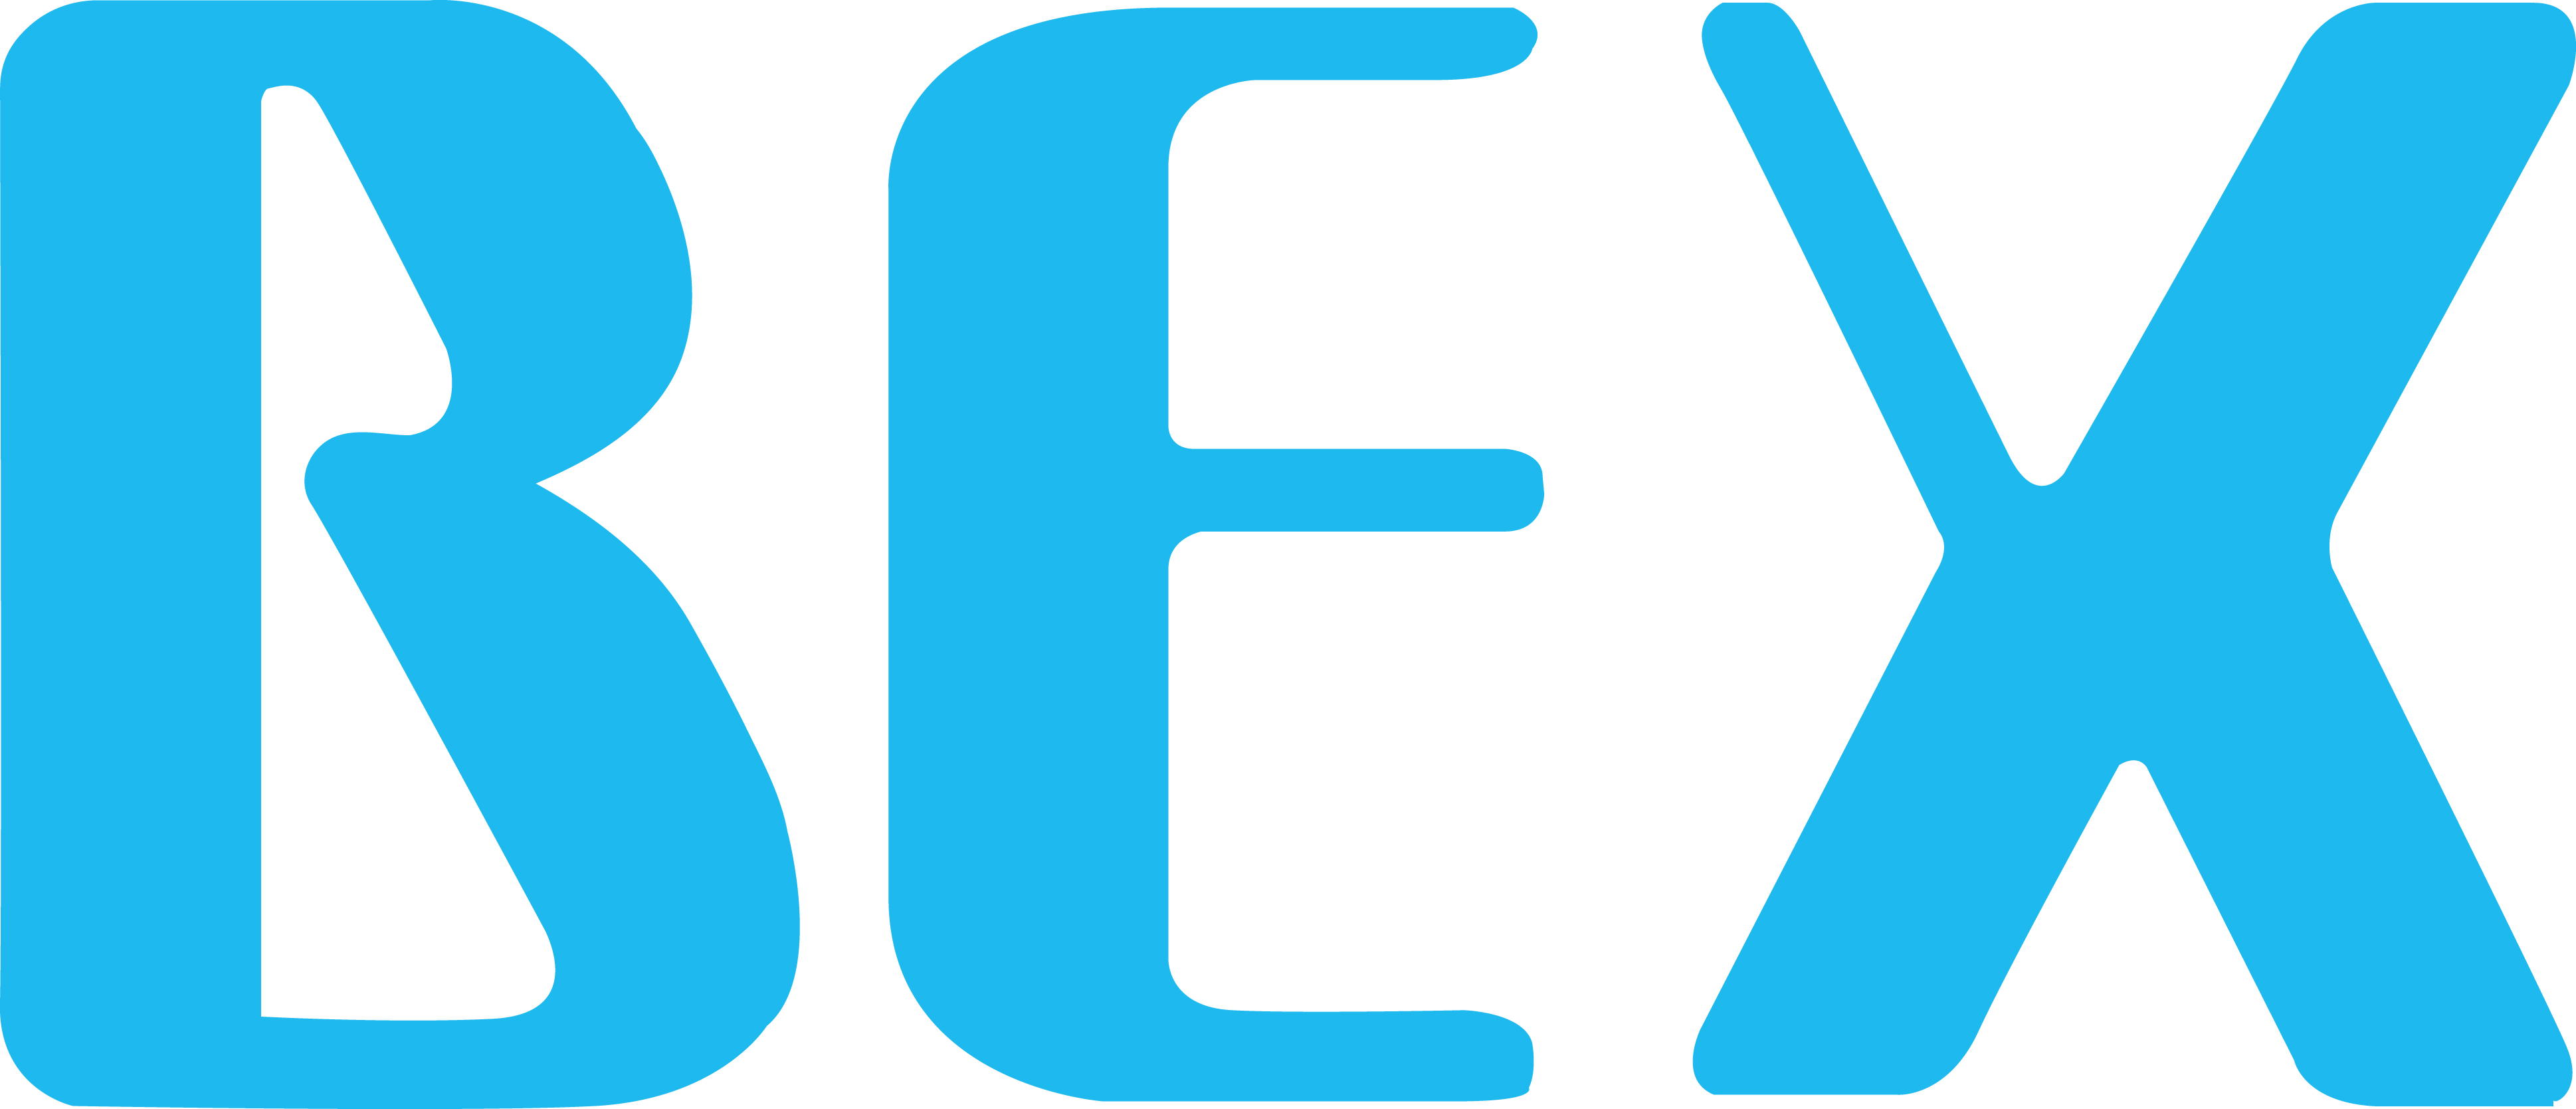 2019-03/bex_logo.jpg